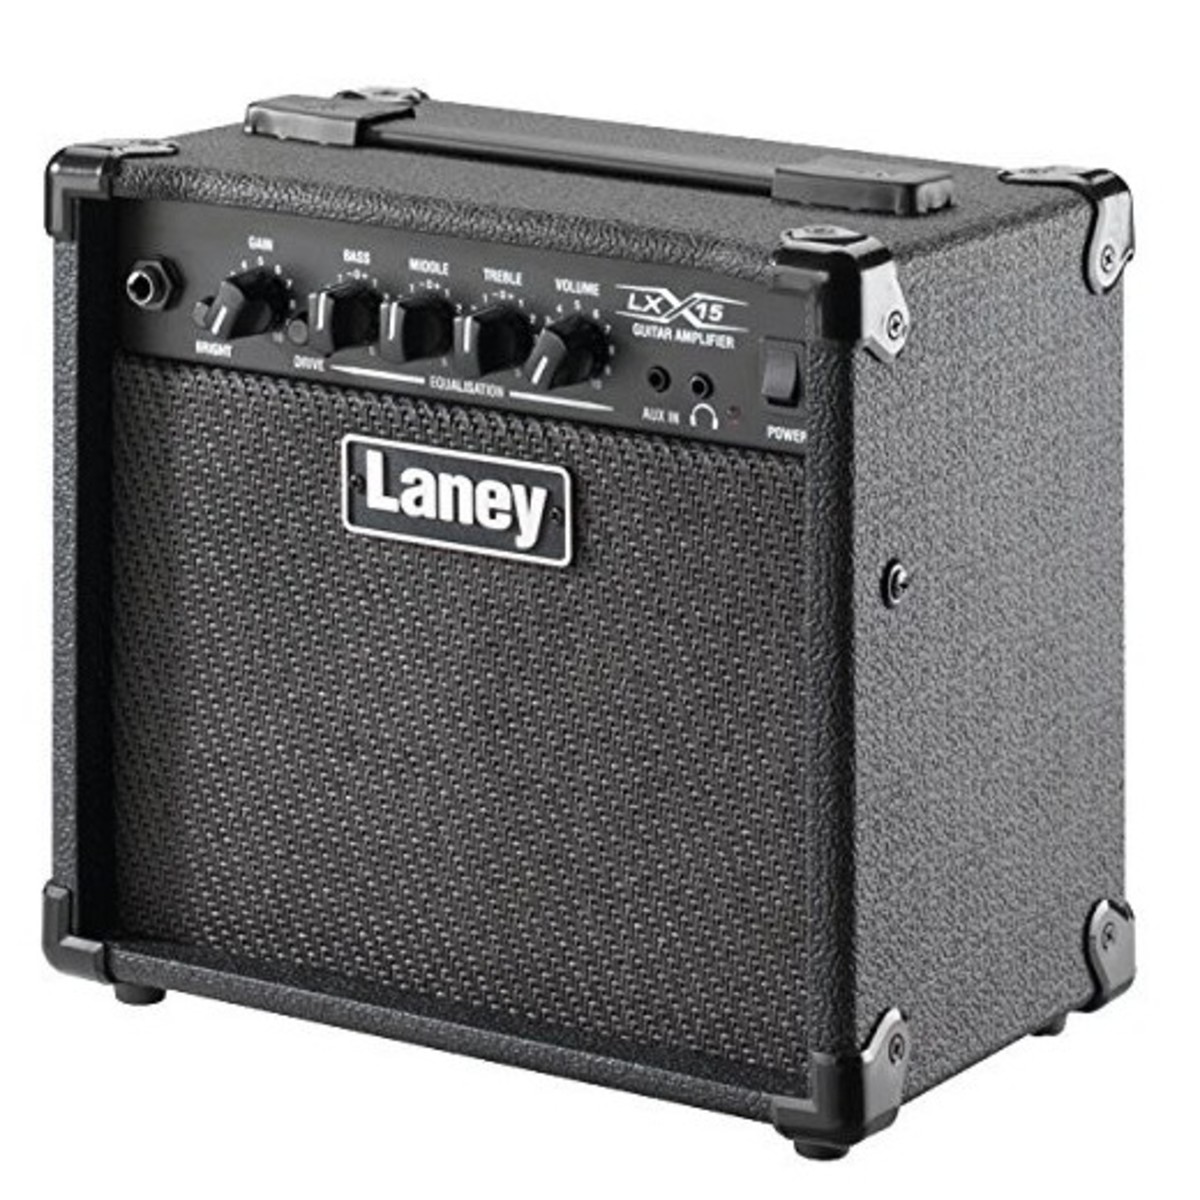 Laney Lx15 15w 2x5 Black - Electric guitar combo amp - Variation 1